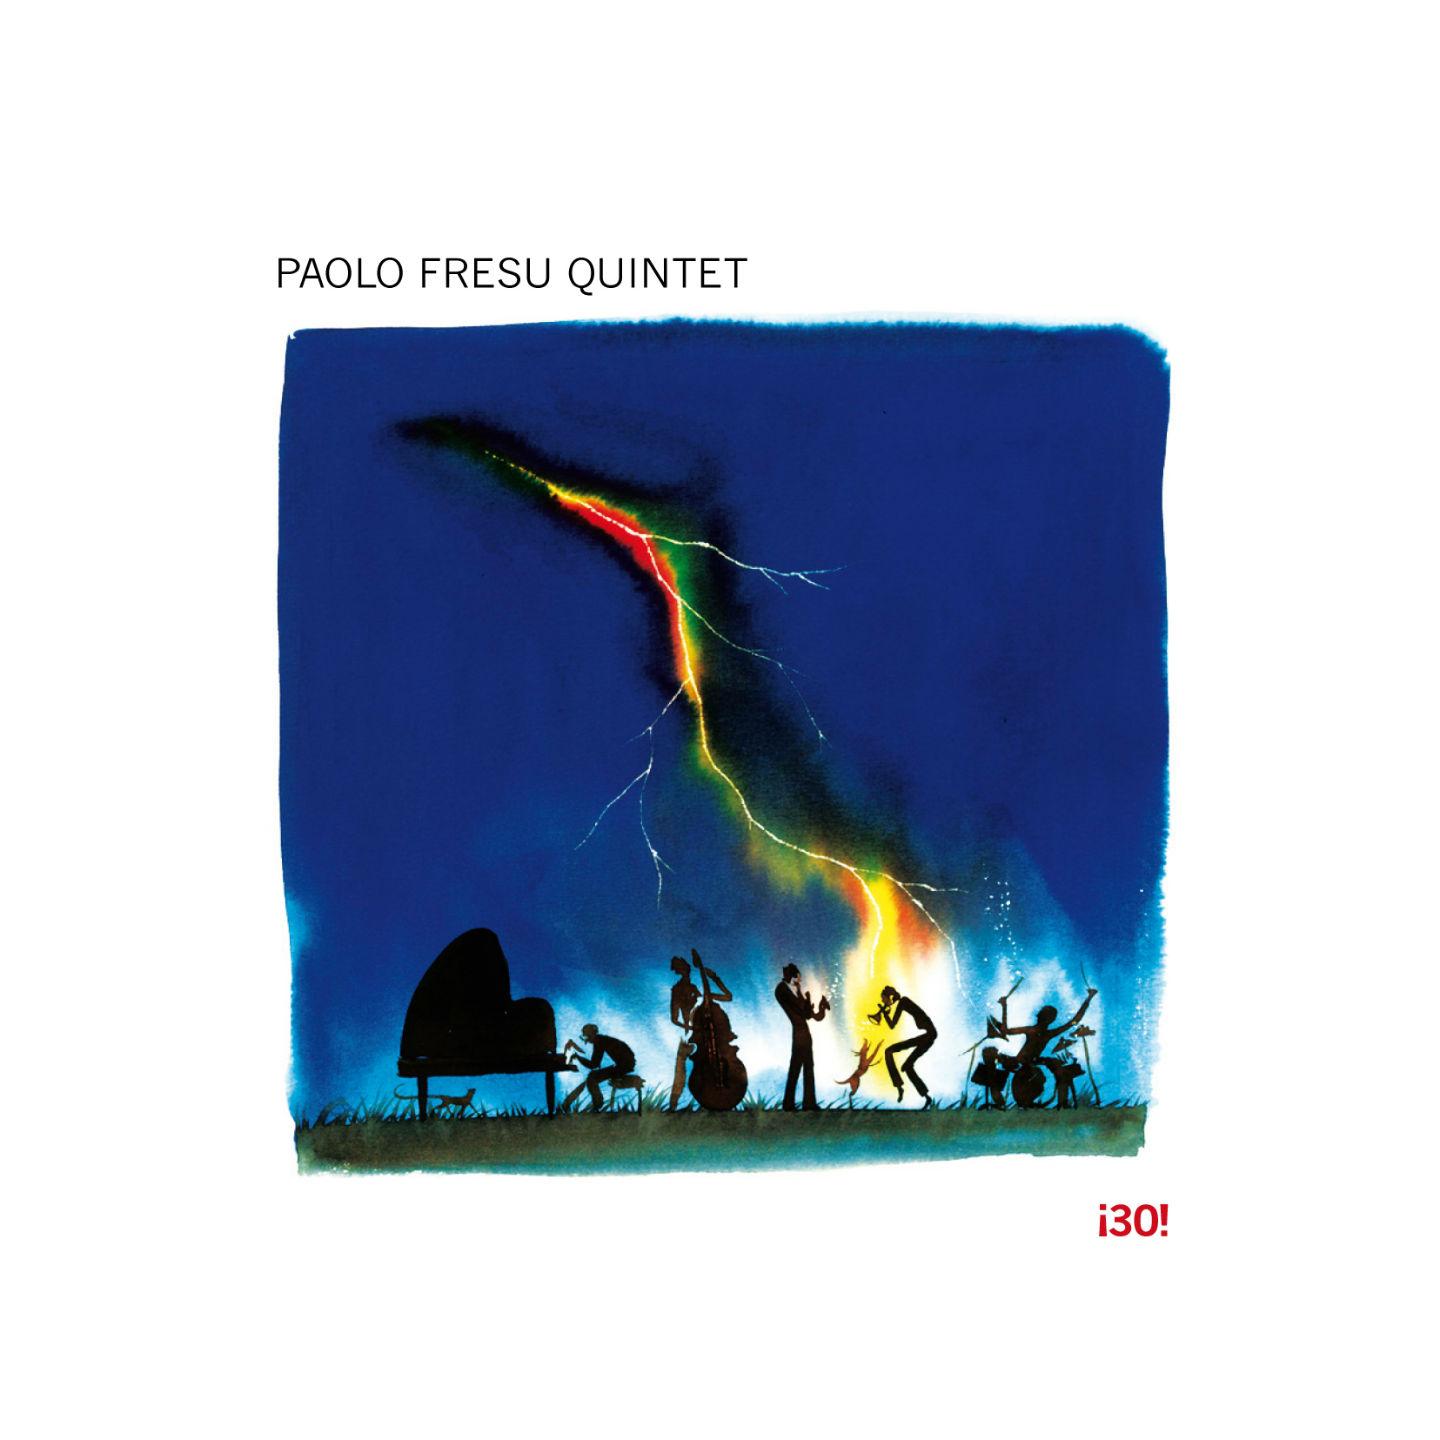 Paolo Fresu Quintet - The Old Way (Bonus Track)